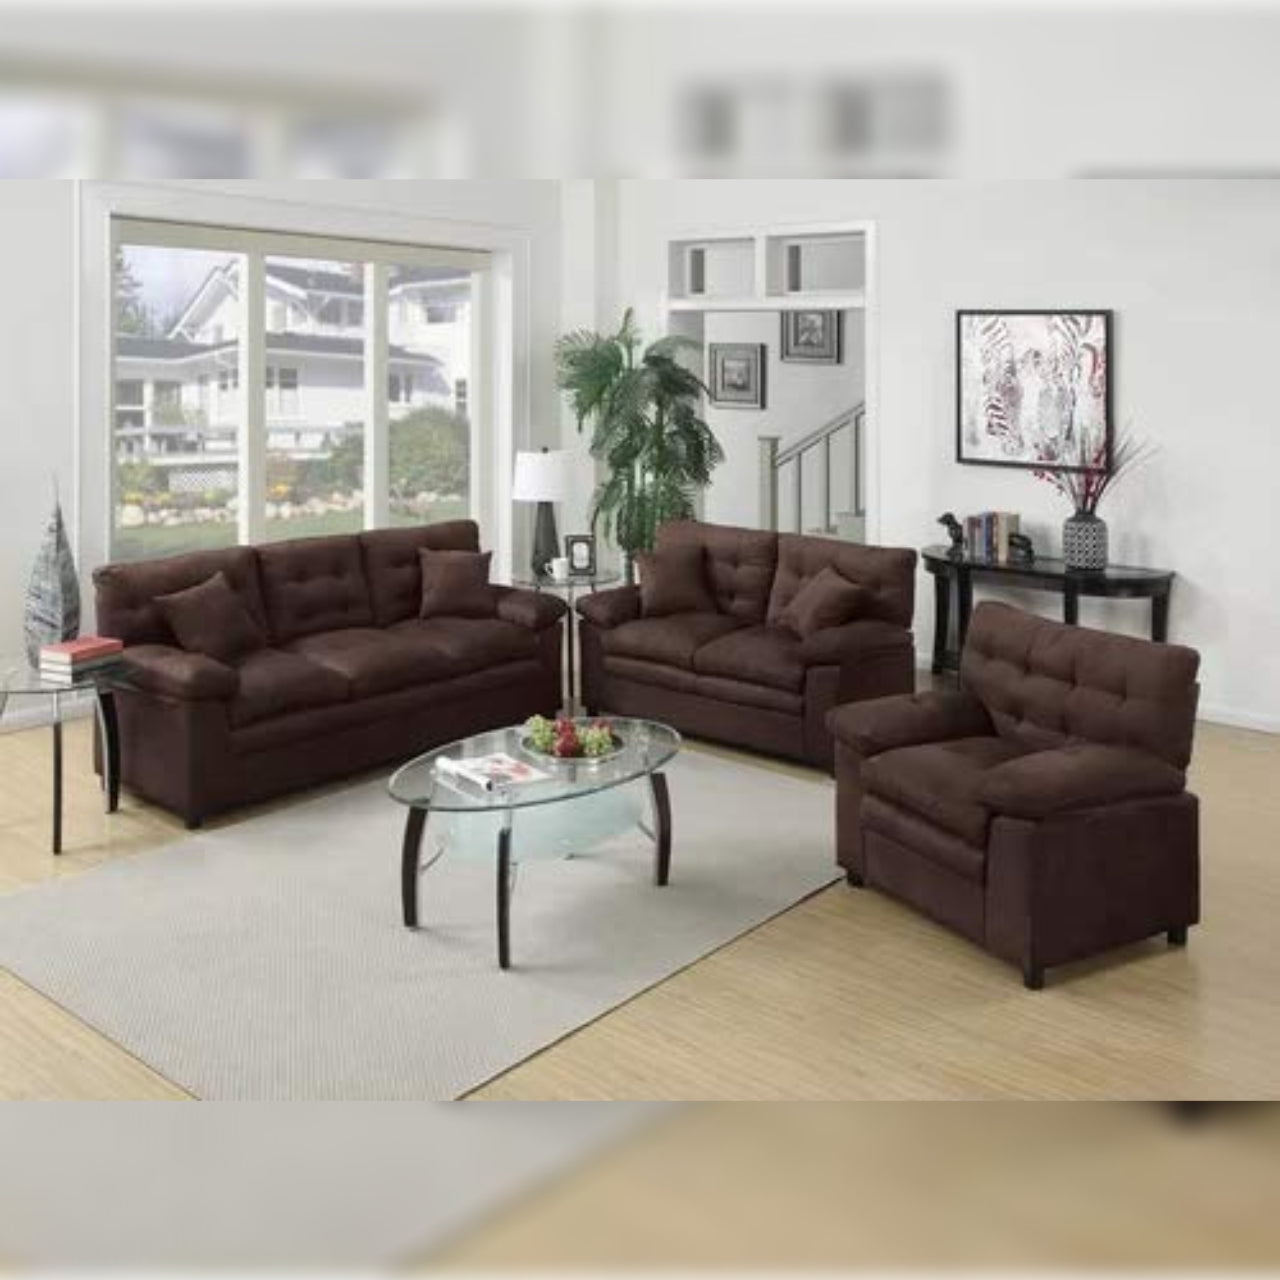 6 Seater Sofa Set- 3 Piece Living Room Fabric Sofa Set (Brown)